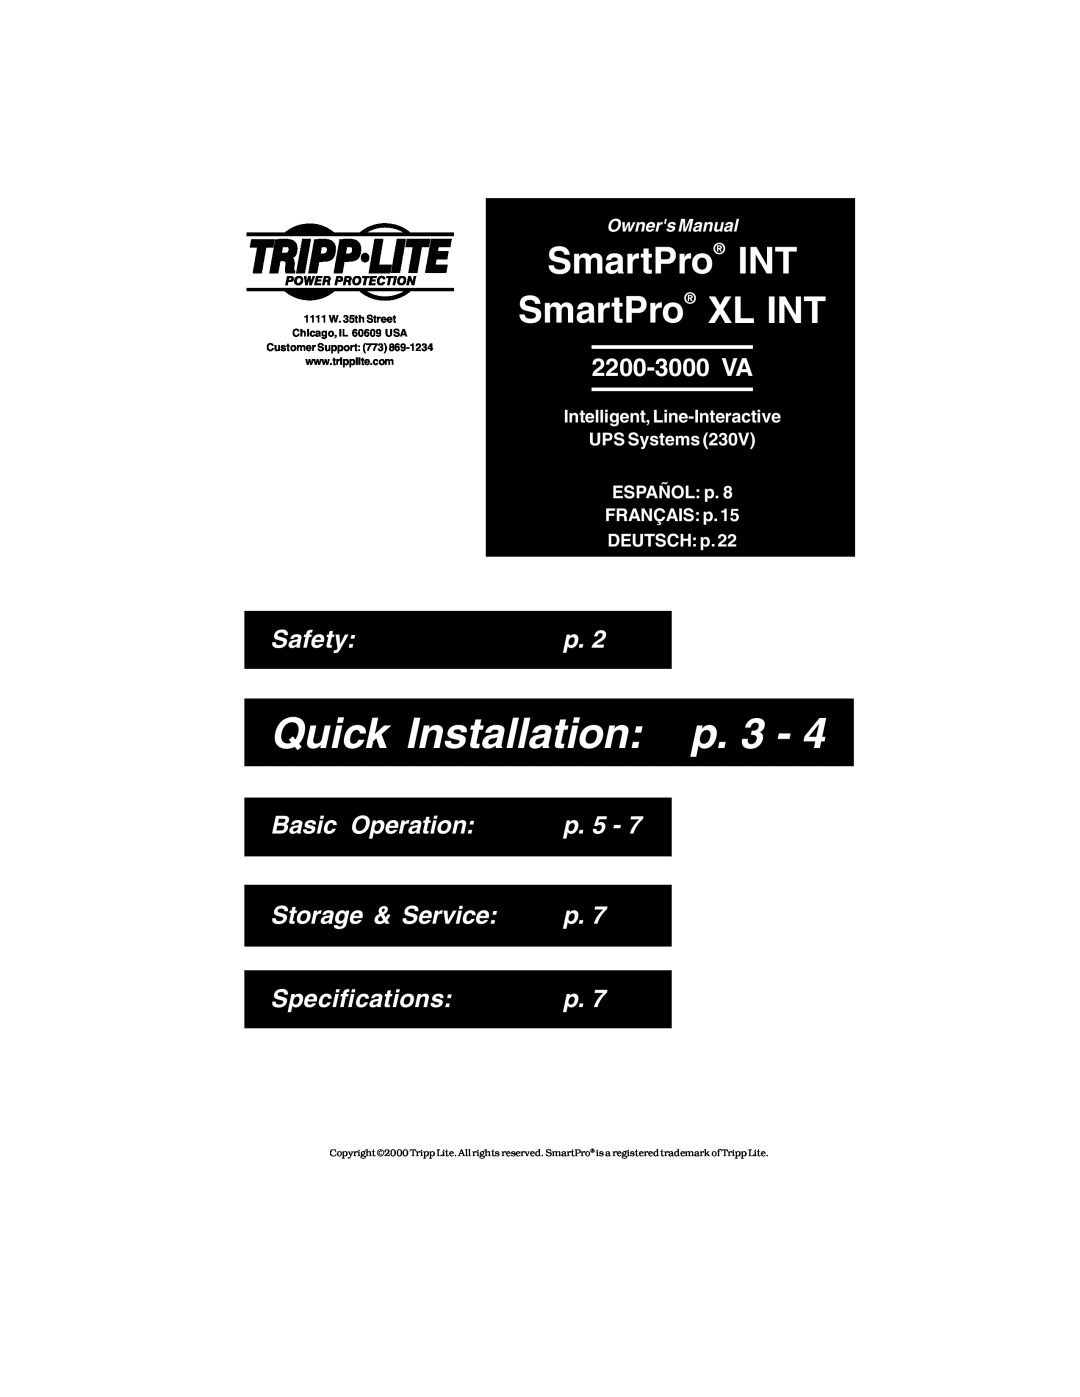 Tripp Lite XL INT specifications Owners Manual, Intelligent, Line-Interactive UPS Systems ESPAÑOL p FRANÇAIS p, DEUTSCH p 